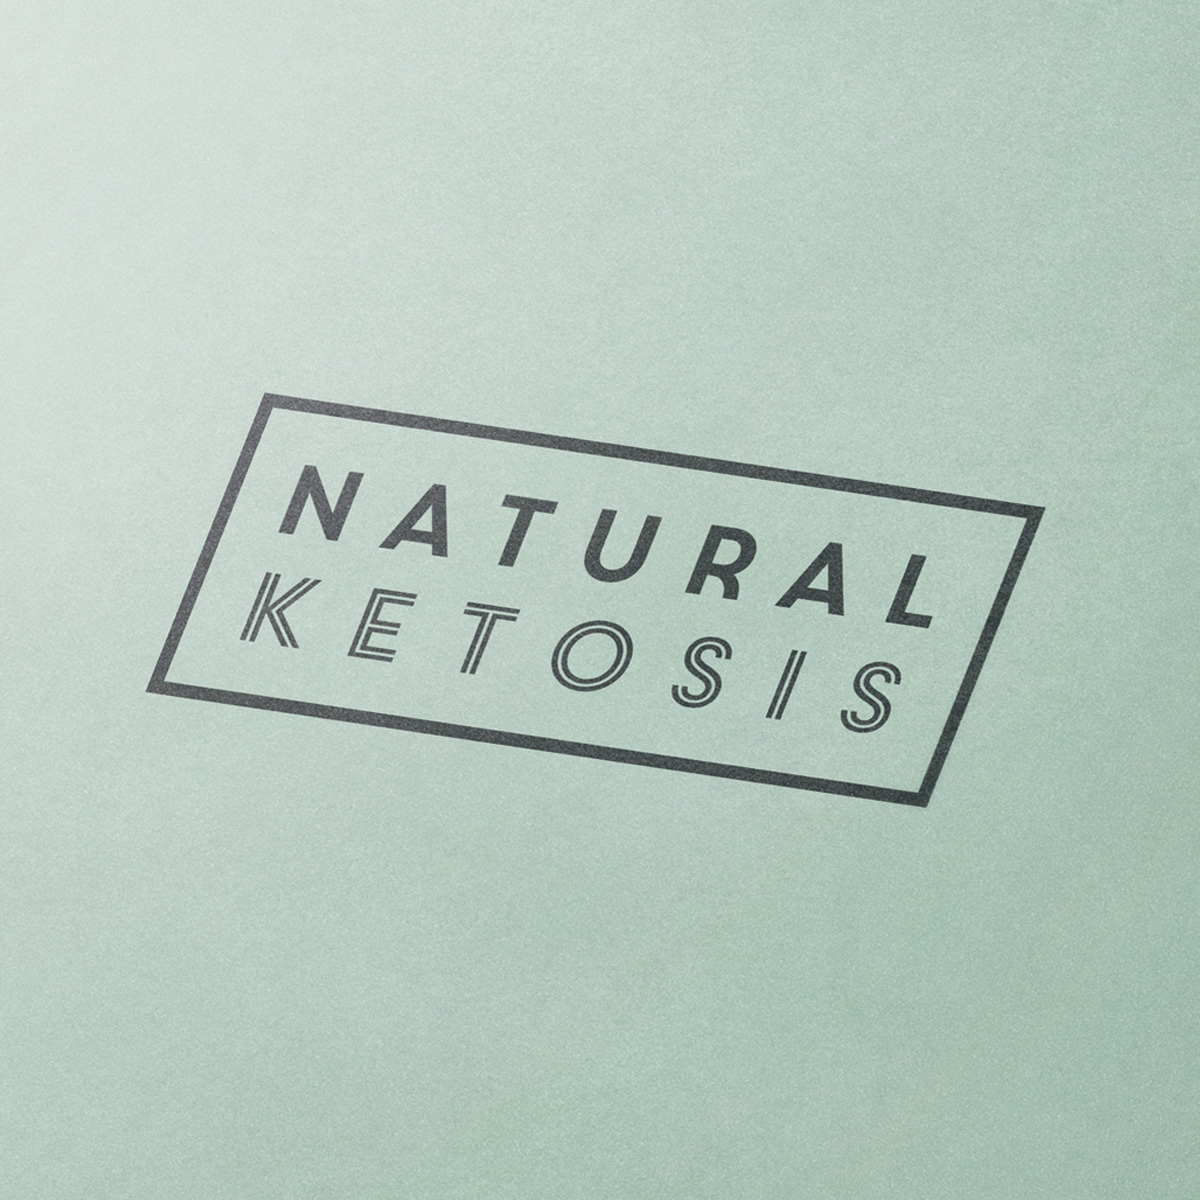 Branding for ketogenic brand Natural Ketosis